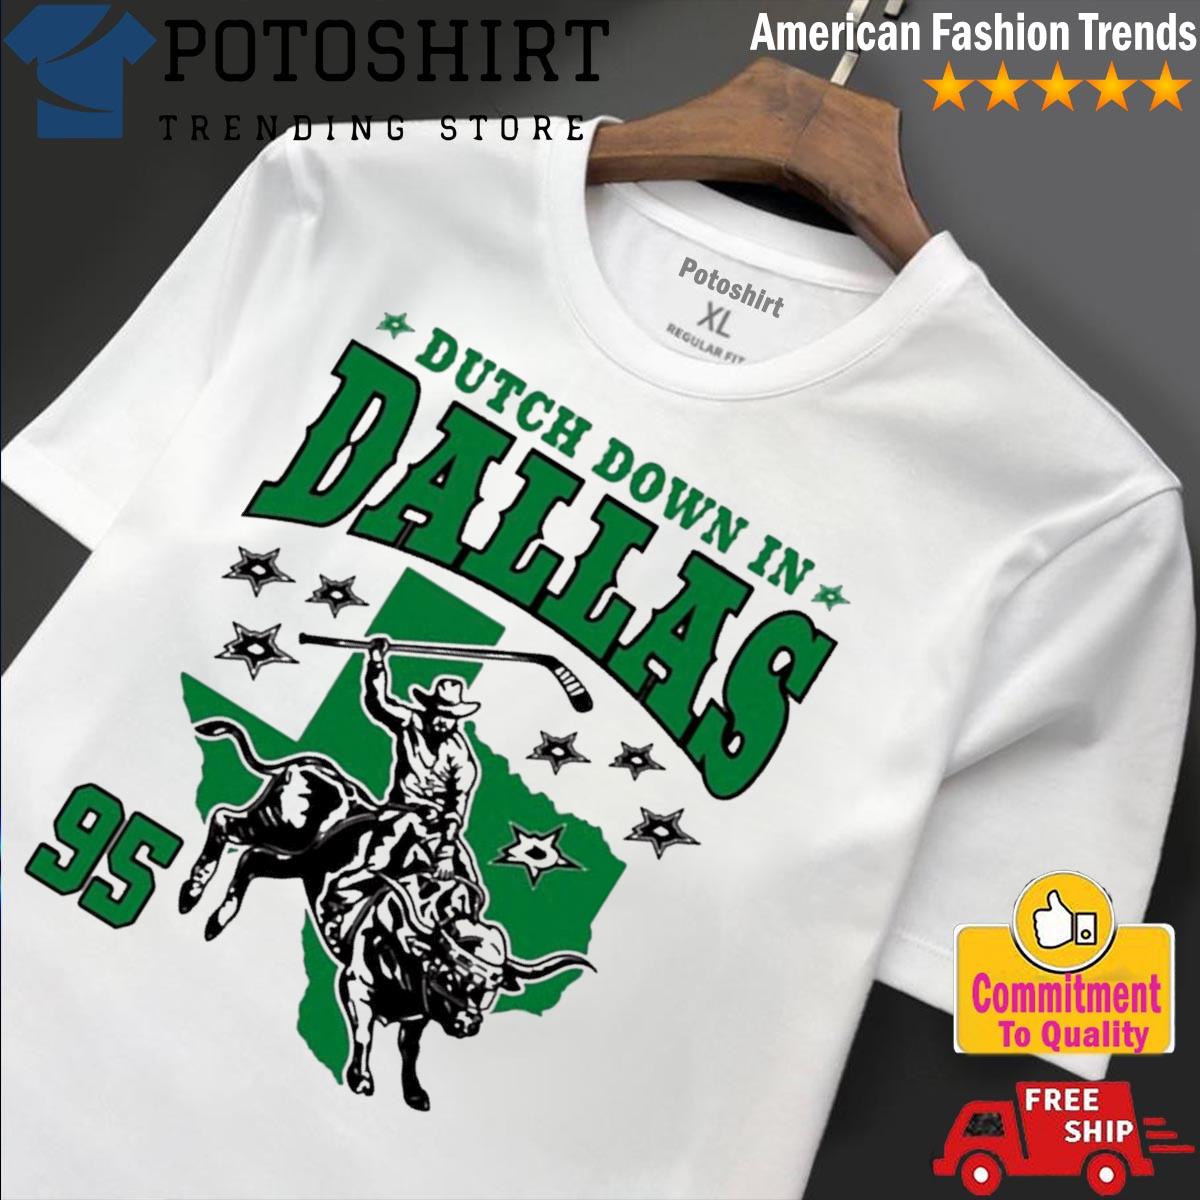 Official Stars Hangar Dallas Stars Jrt Dutch Down In Dallas Shirt, hoodie,  tank top, sweater and long sleeve t-shirt